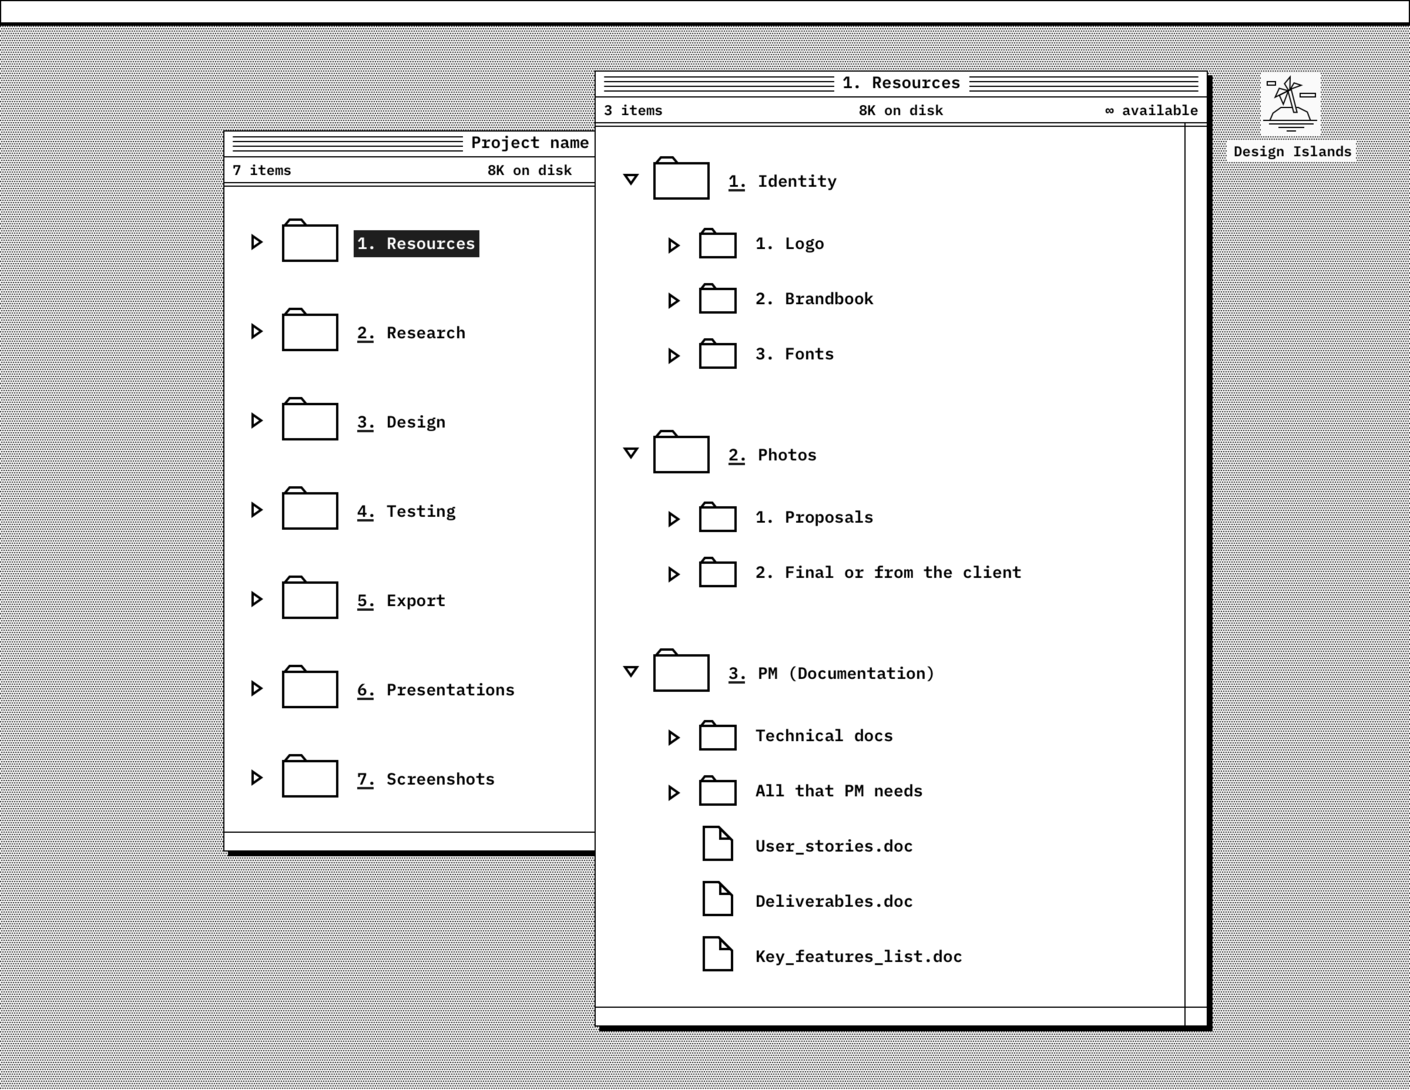 Resources folder